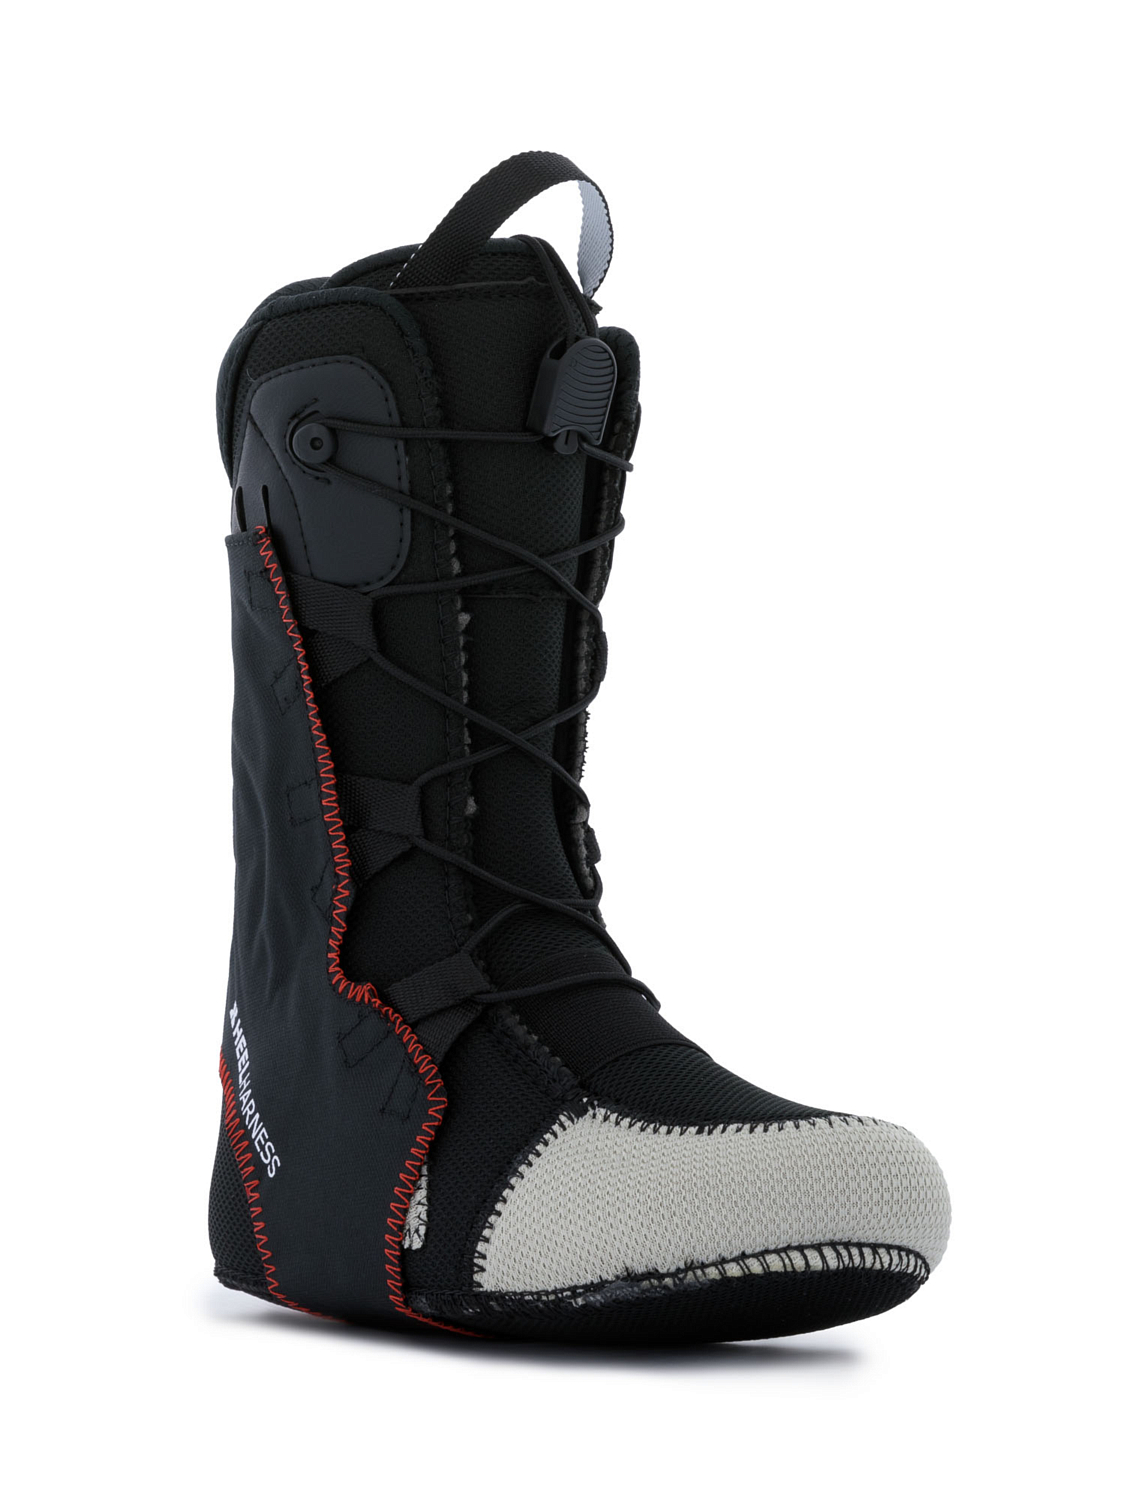 Ботинки для сноуборда DEELUXE Team Id Lara Essential Black